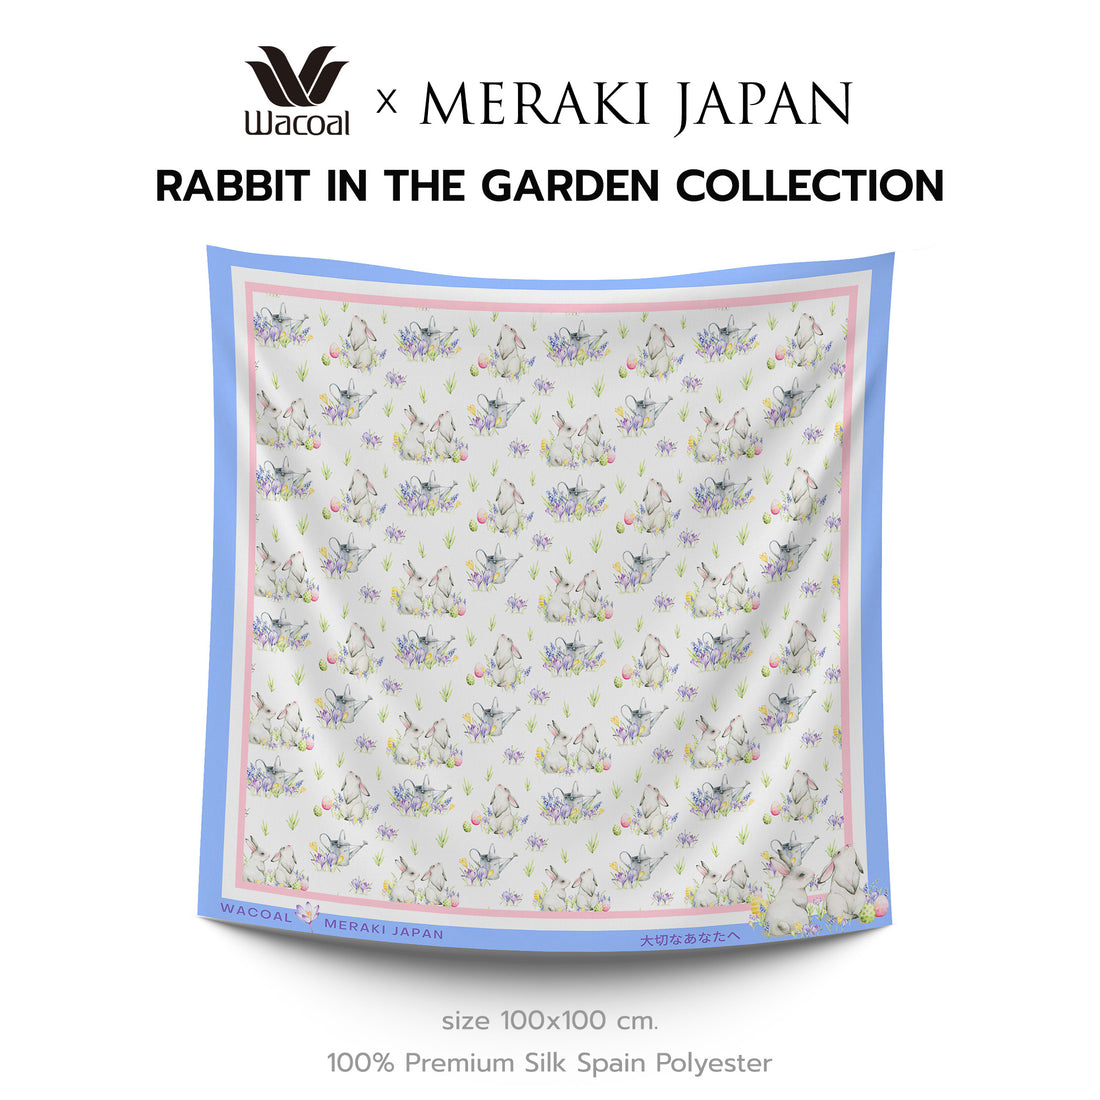 Wacoal x Meraki Rabbit in the Garden shawl/multi-purpose cover, model WW120300PE, blue (PE)